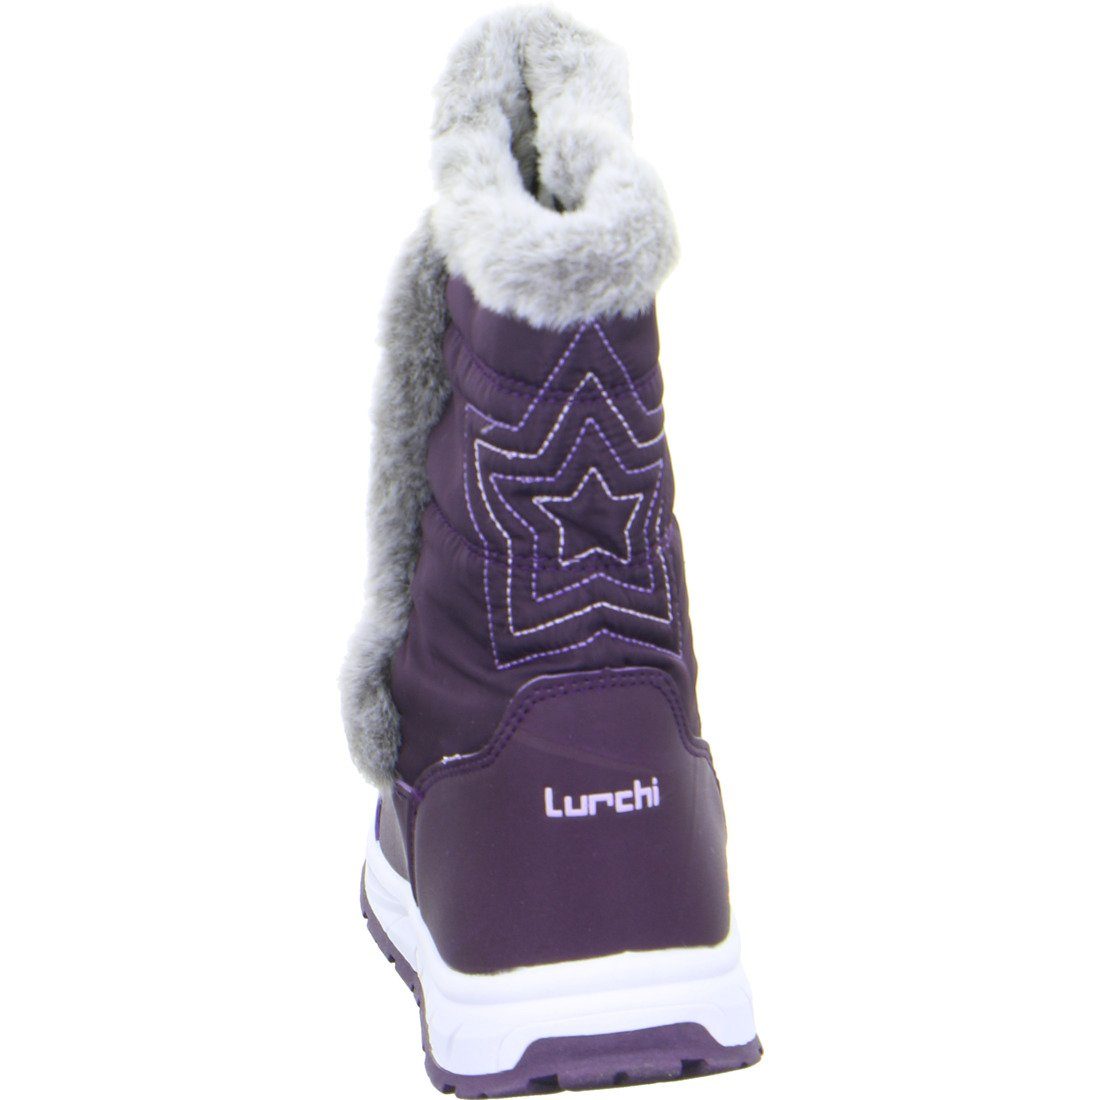 Lurchi Lurchi Schuhe, lila Synthetik Stiefel Abyra-Tex Stiefel 049347 